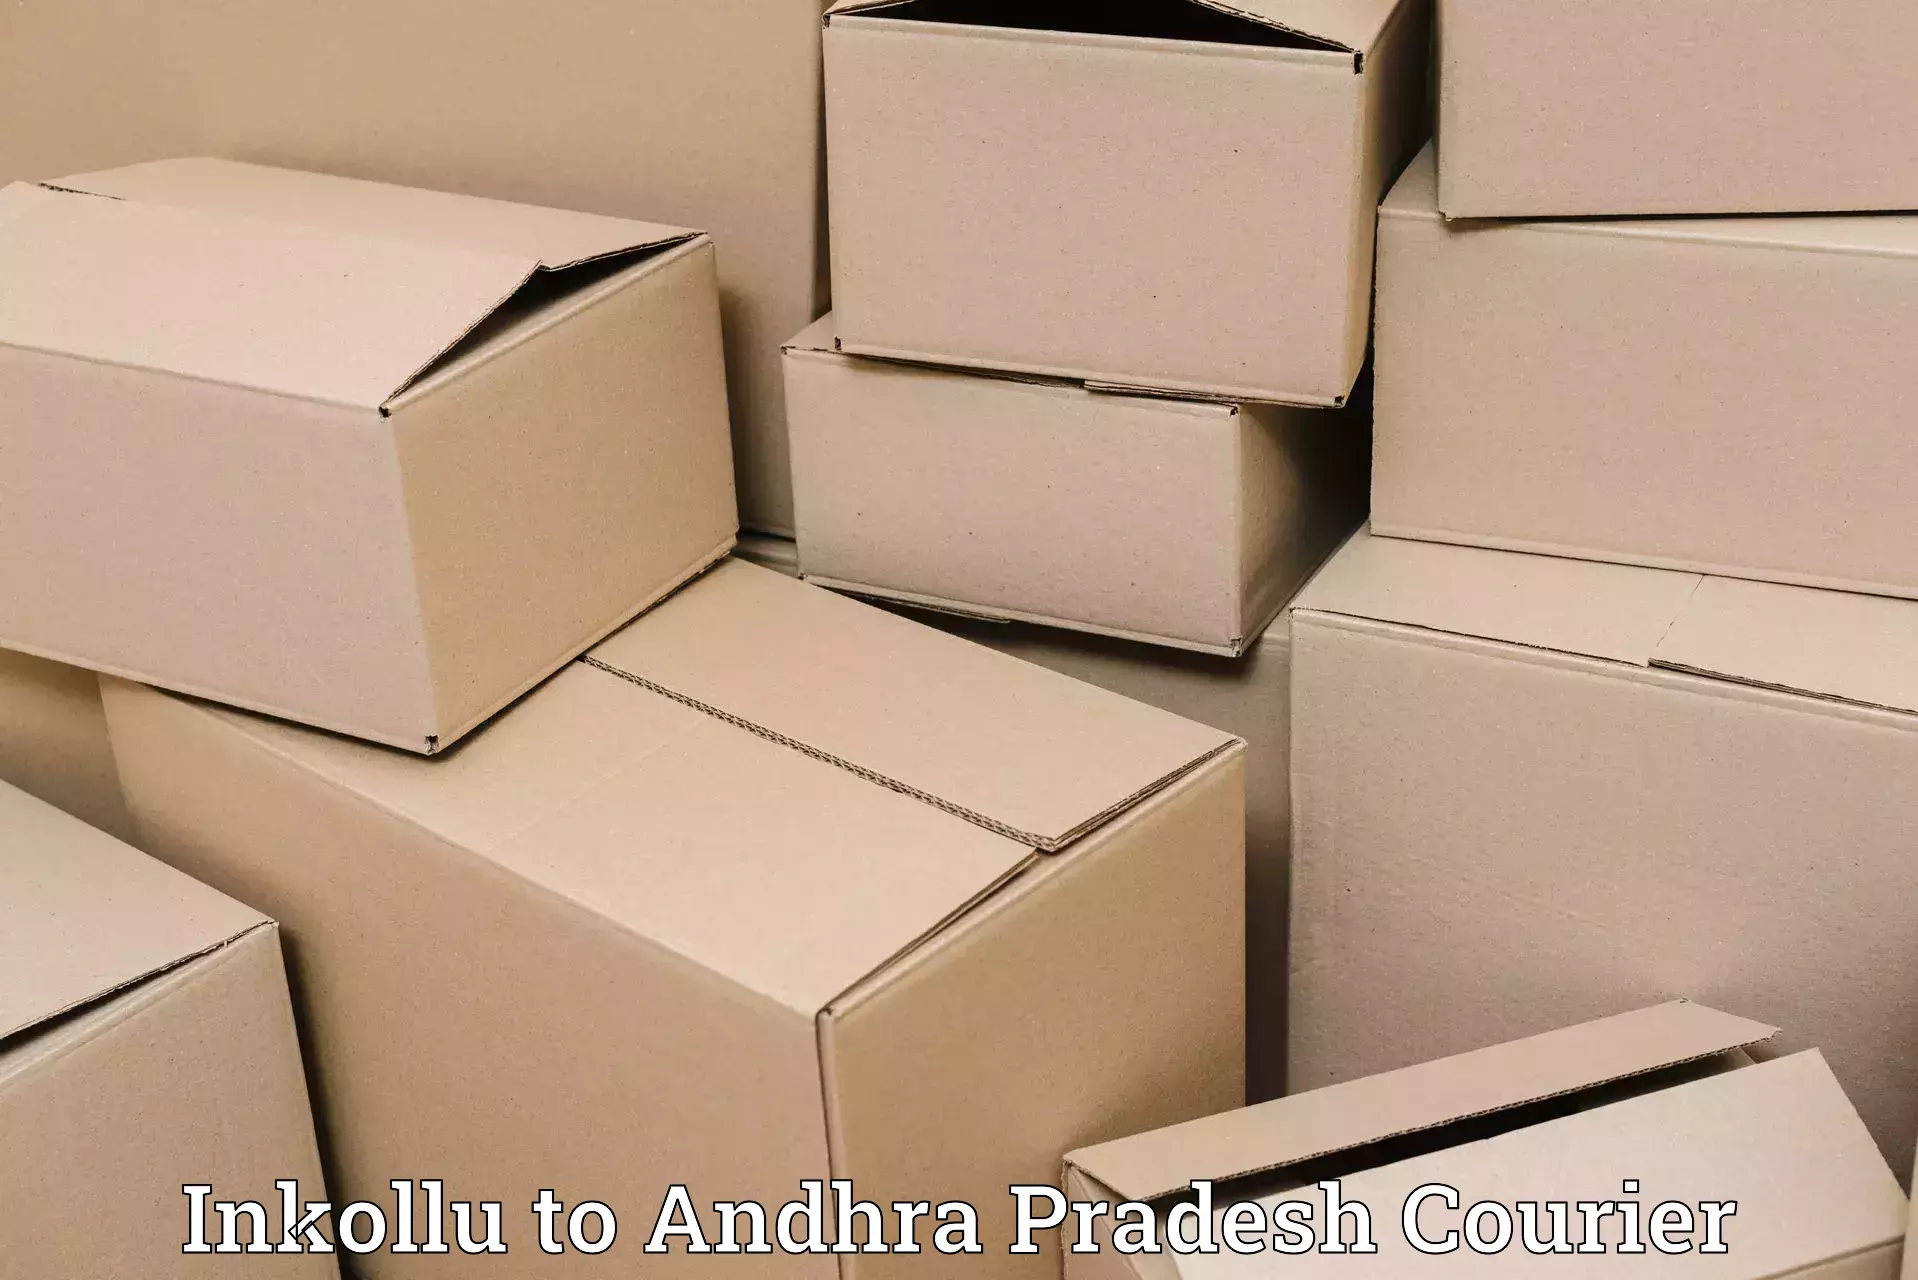 Advanced delivery network in Inkollu to Chodavaram